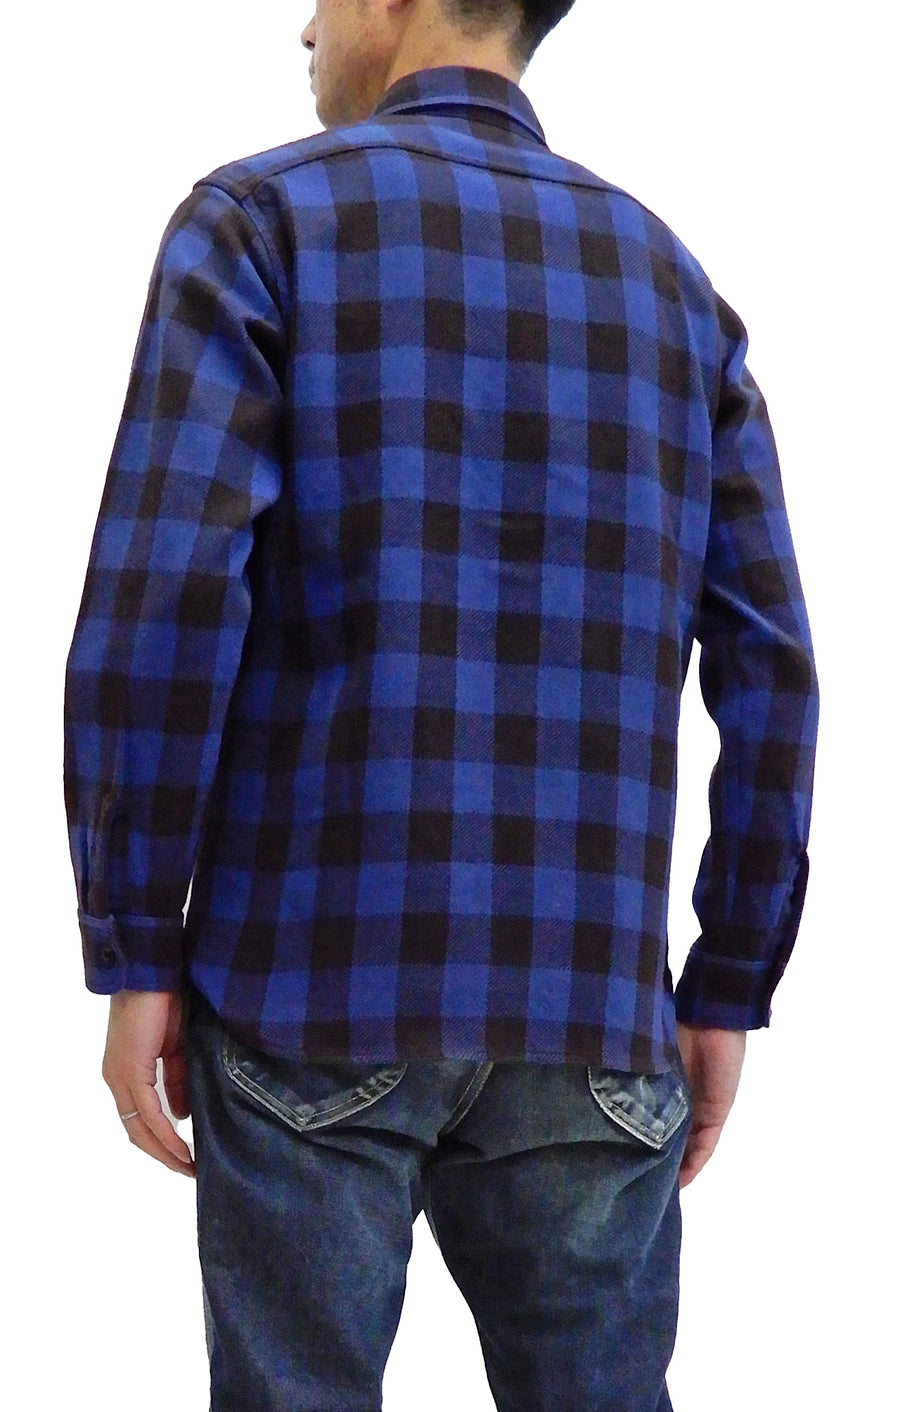 TOYS McCOY Buffalo Plaid Shirt Men's Long Sleeve Checked Button Up Shirt TMS2007 Blue